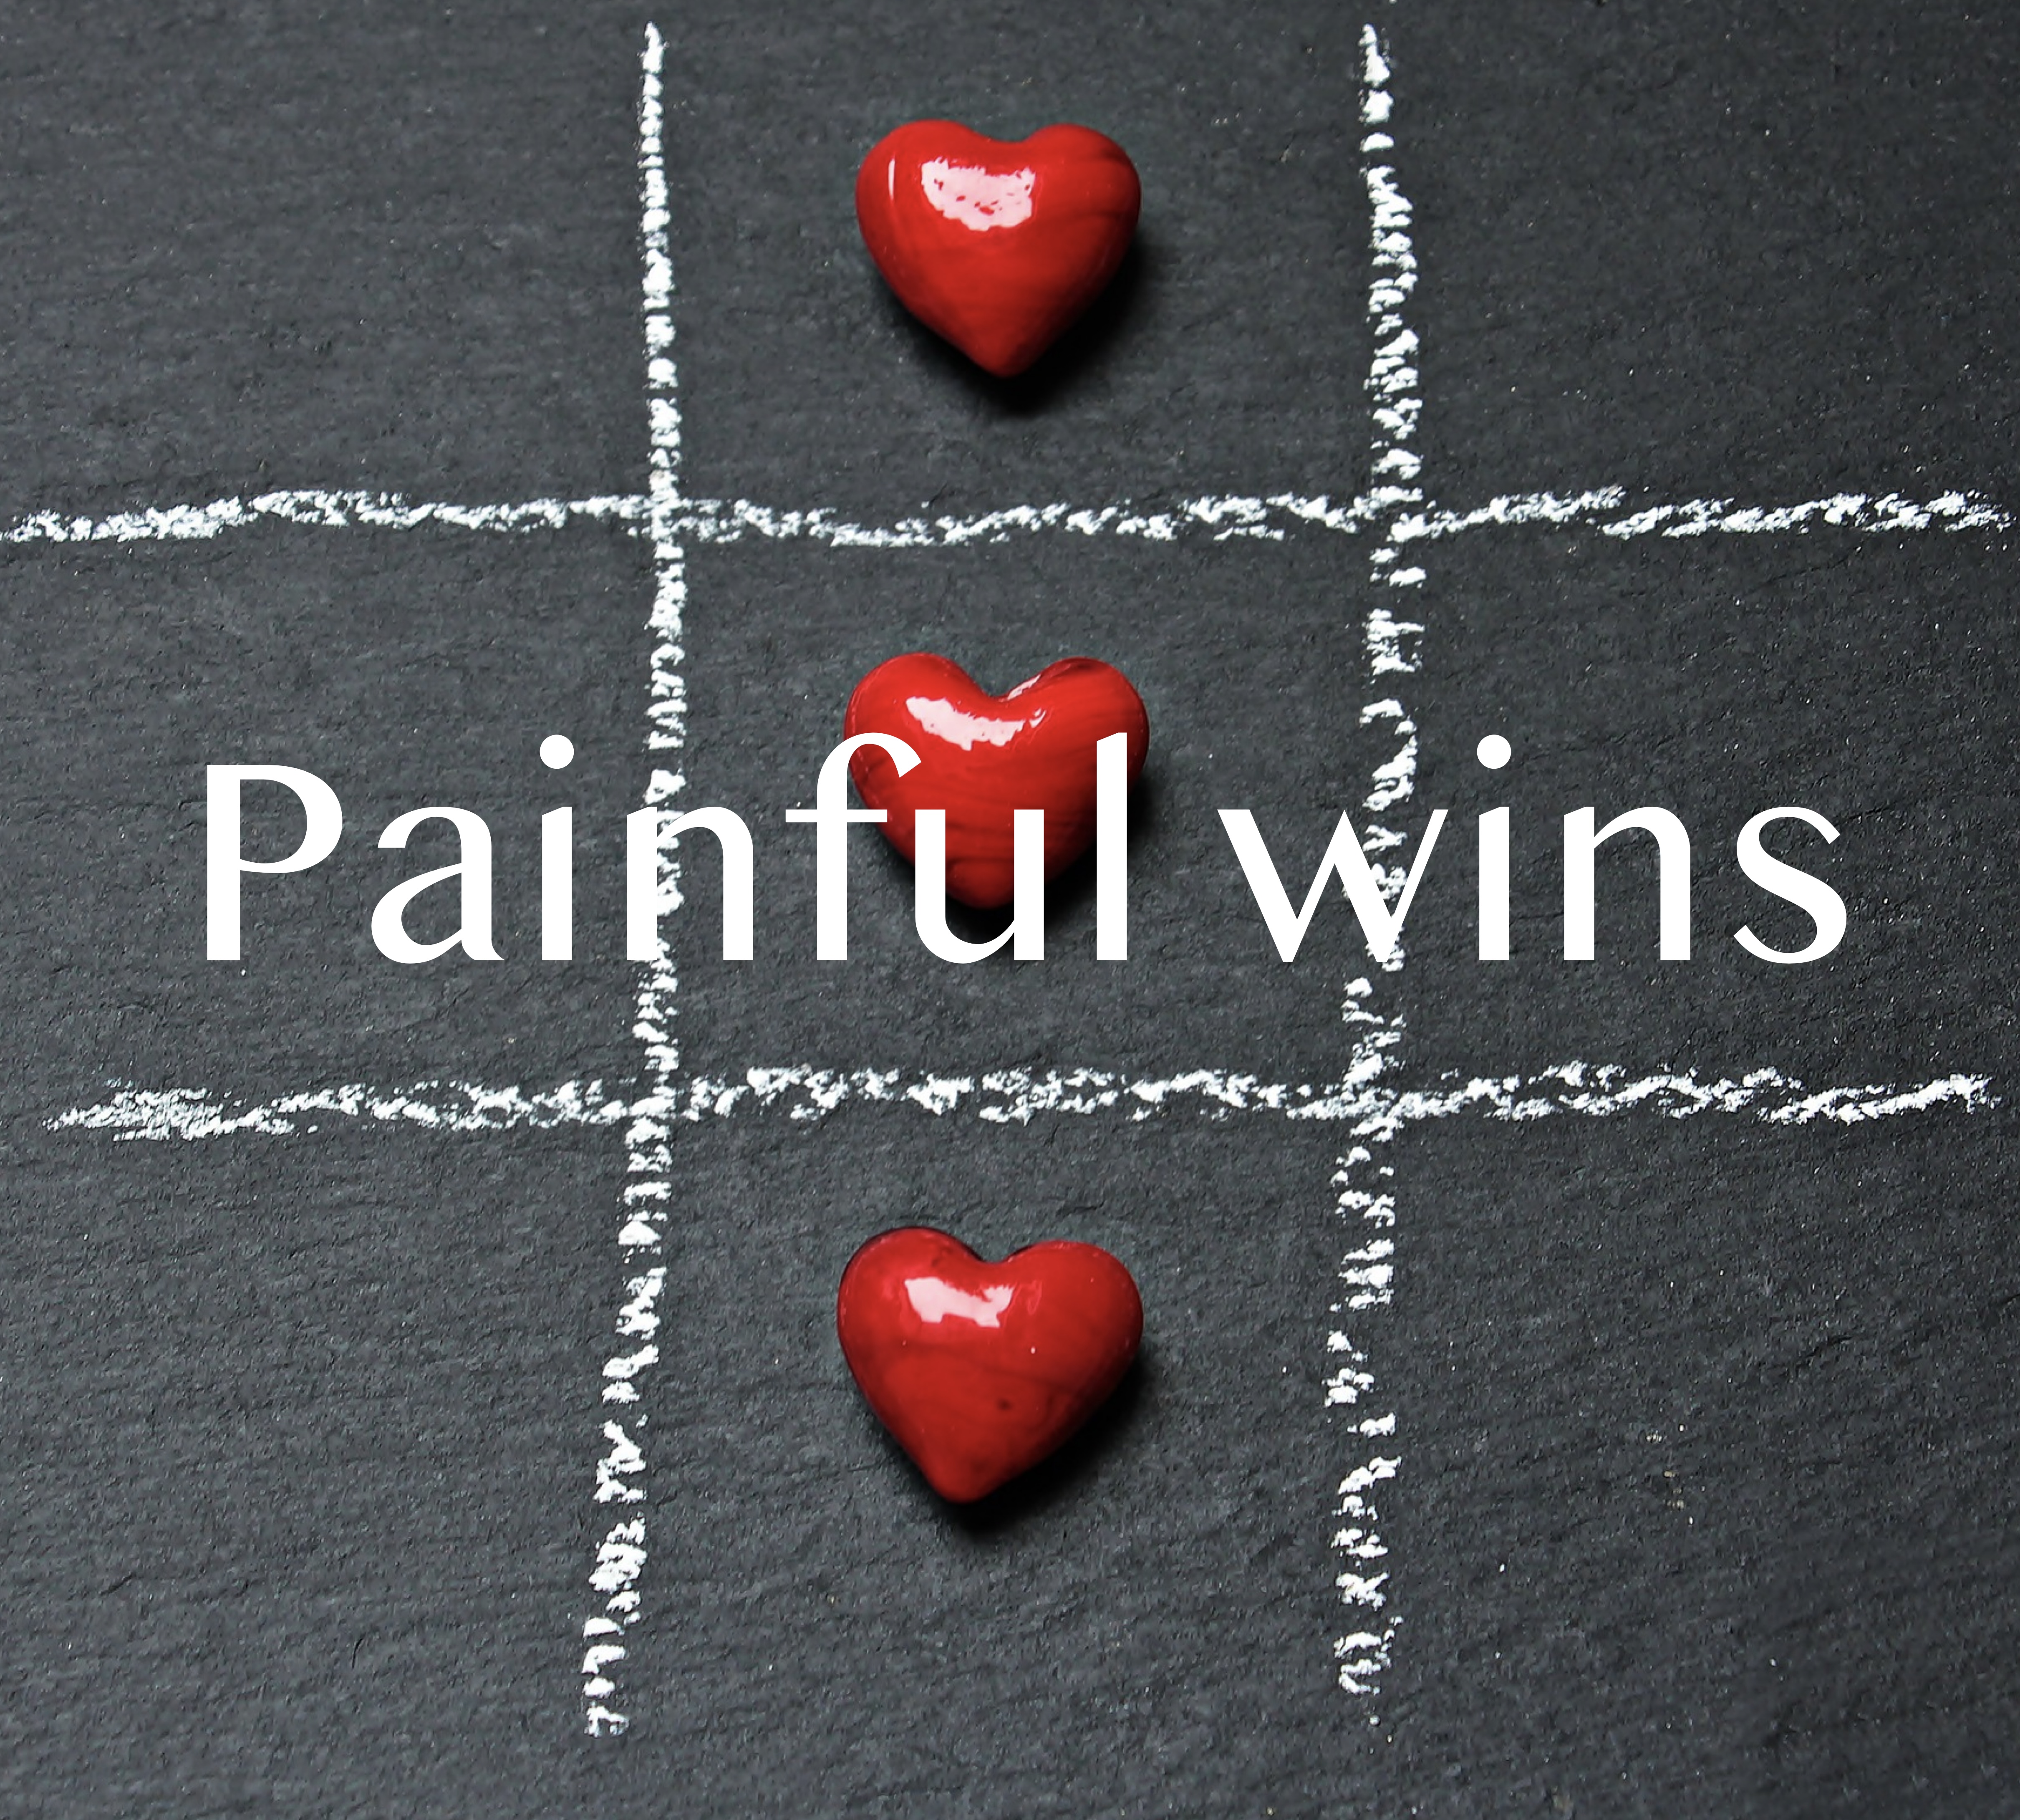 Painful Wins…